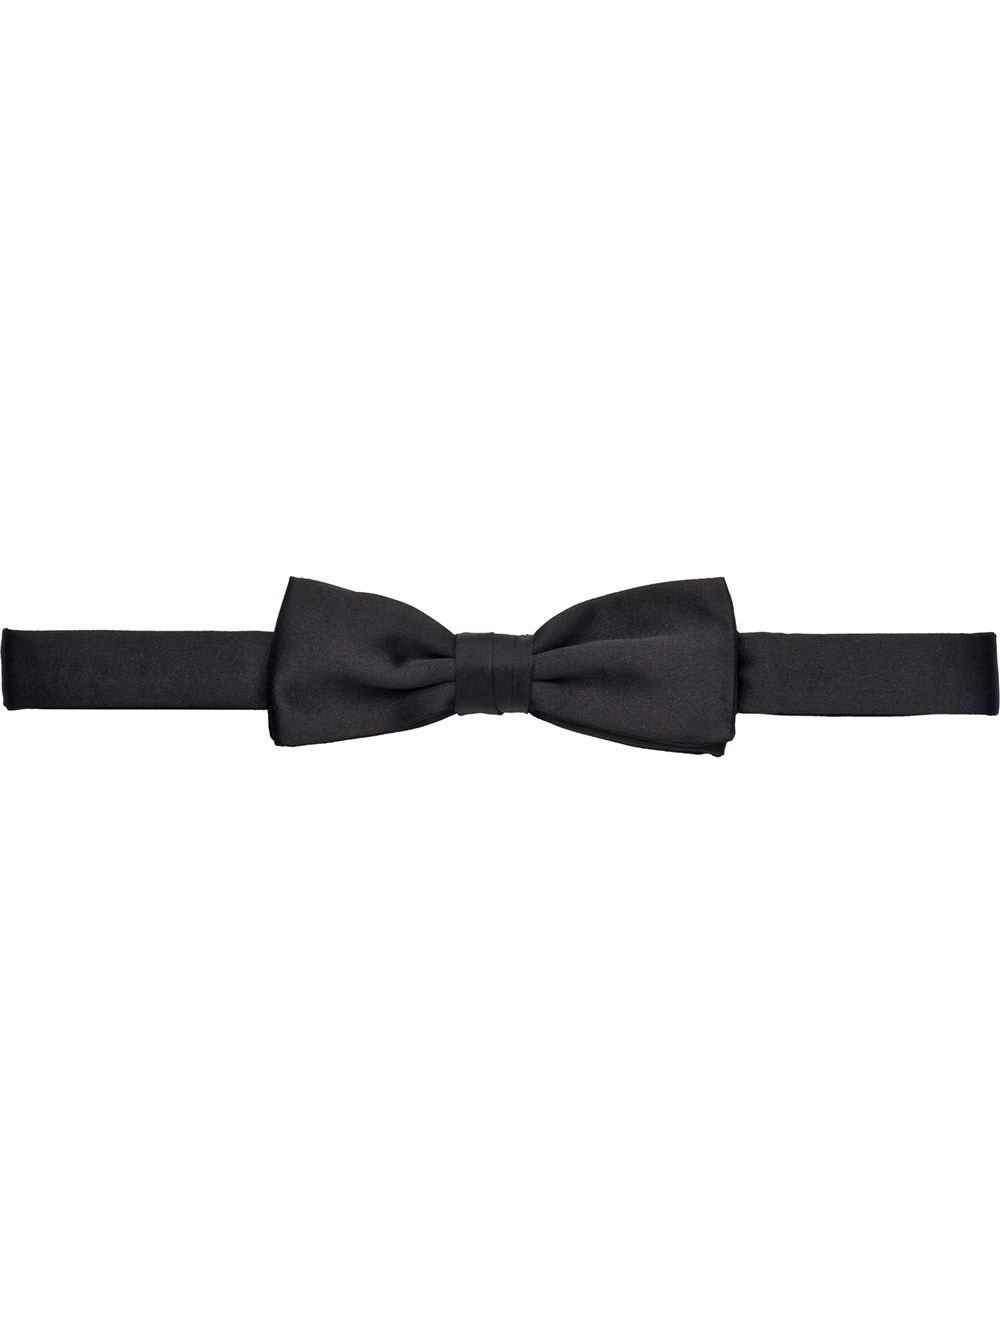 Prada satin bow tie - Black von Prada